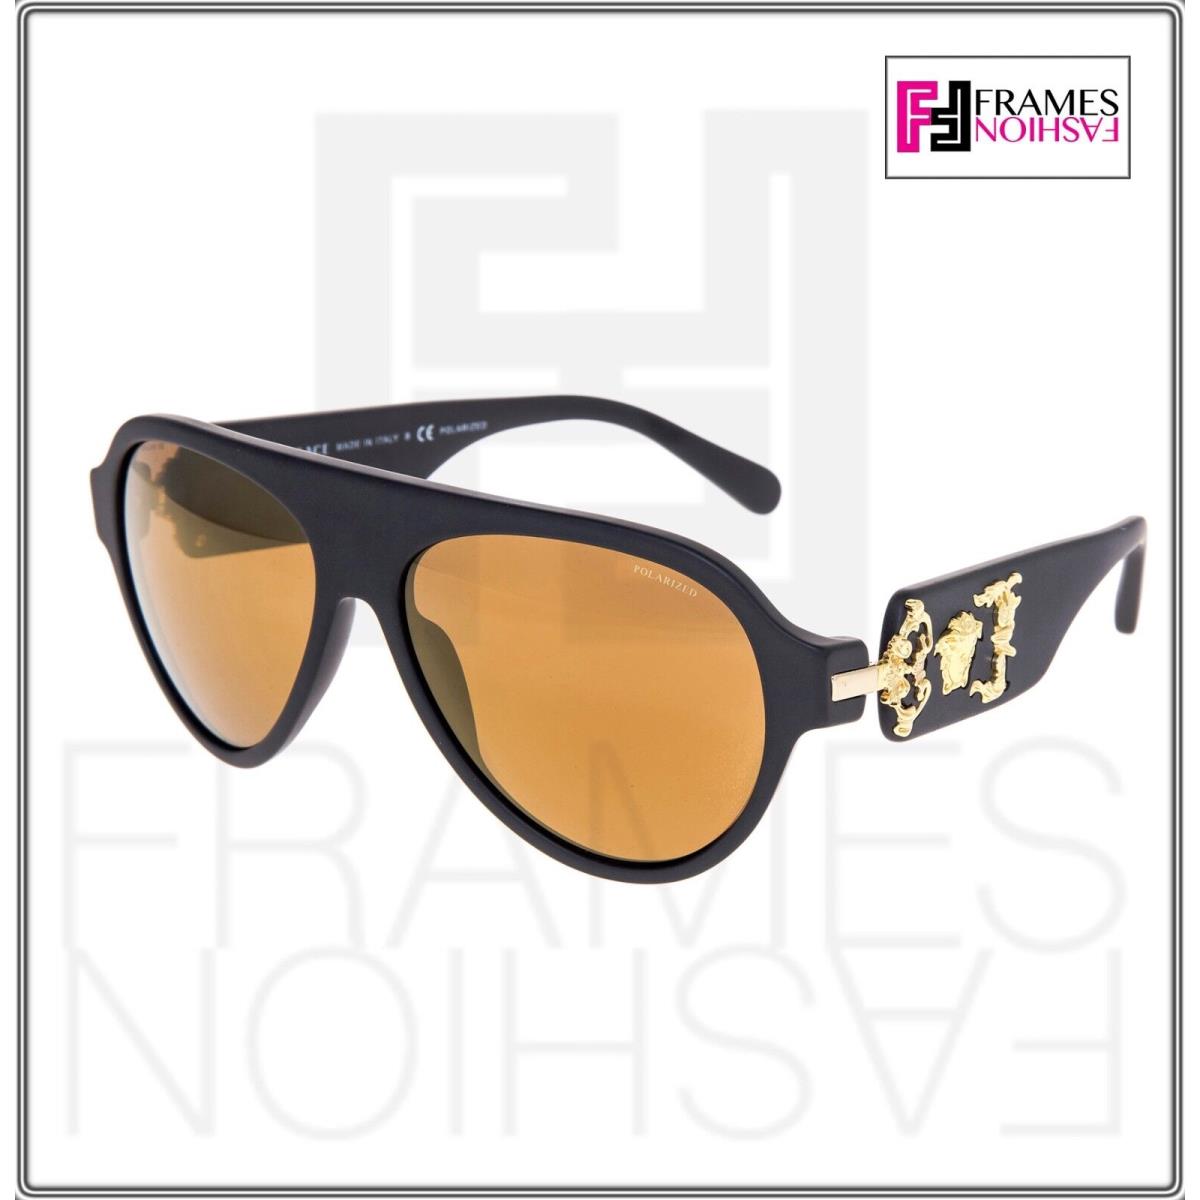 Versace sunglasses  - 5079/2T , Matte Black Frame, Brown Gold Lens